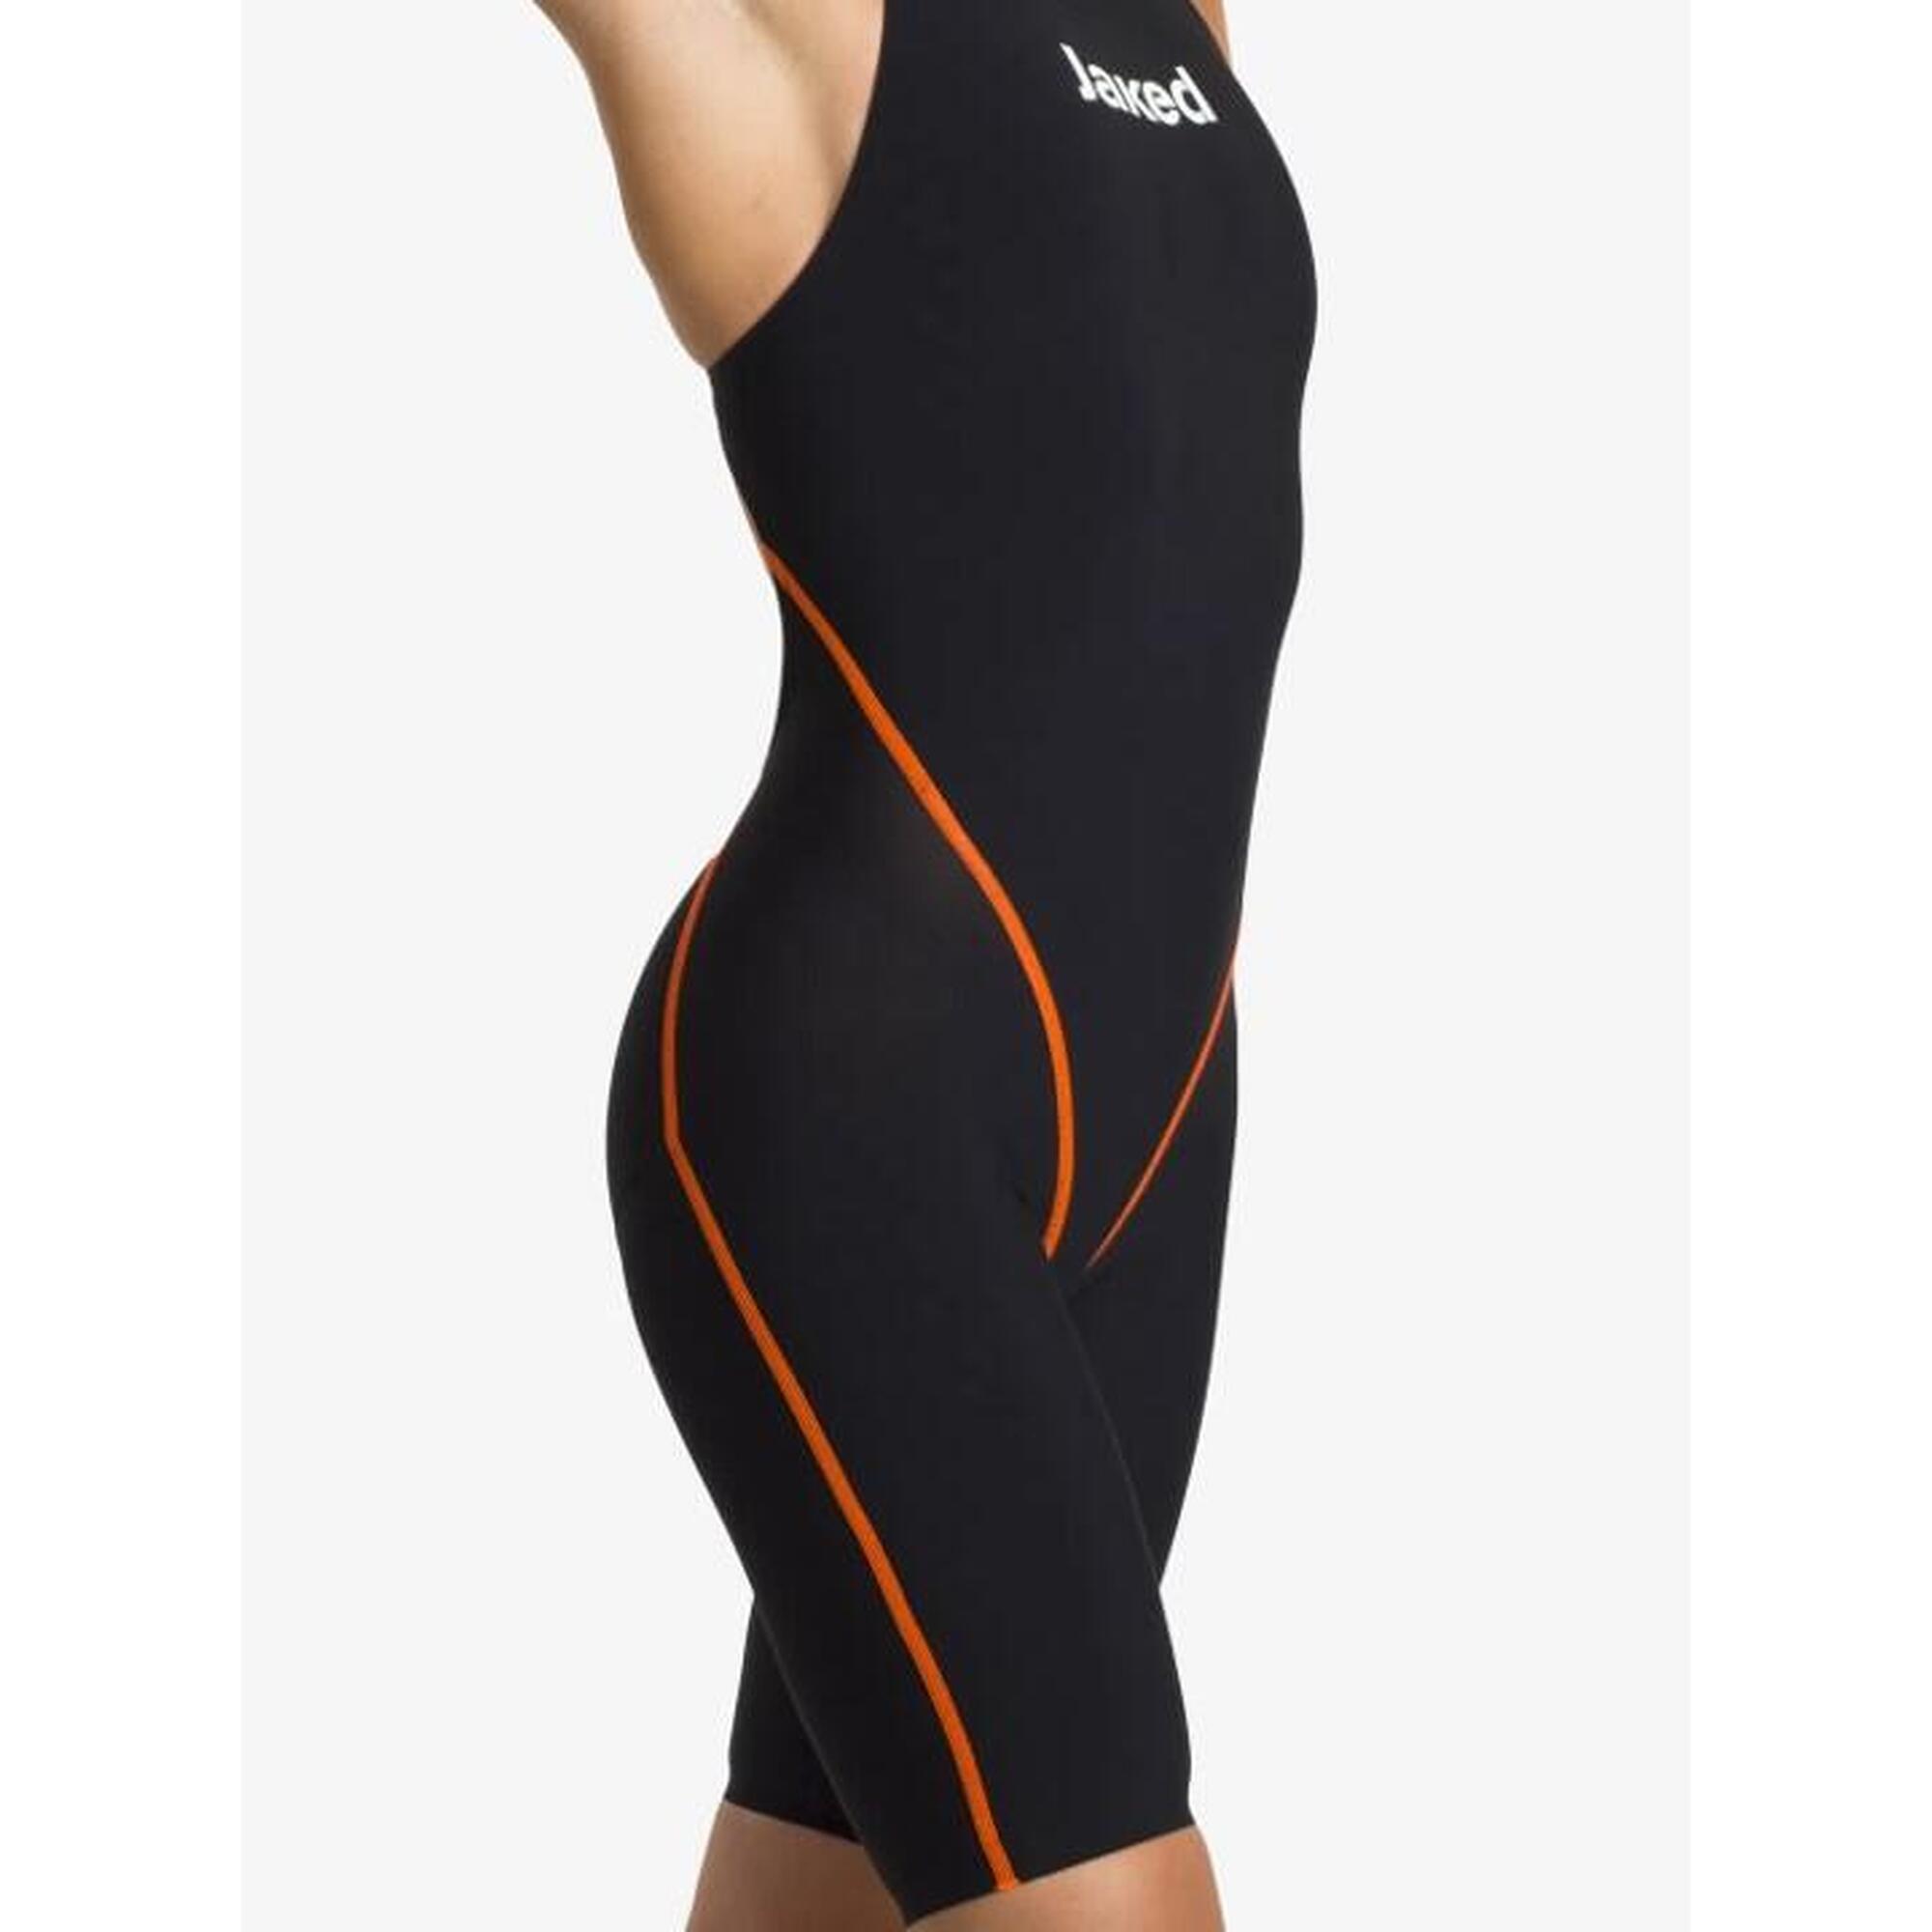 JALPHA FINA Approved Girl's Open Back Swimsuit - Black